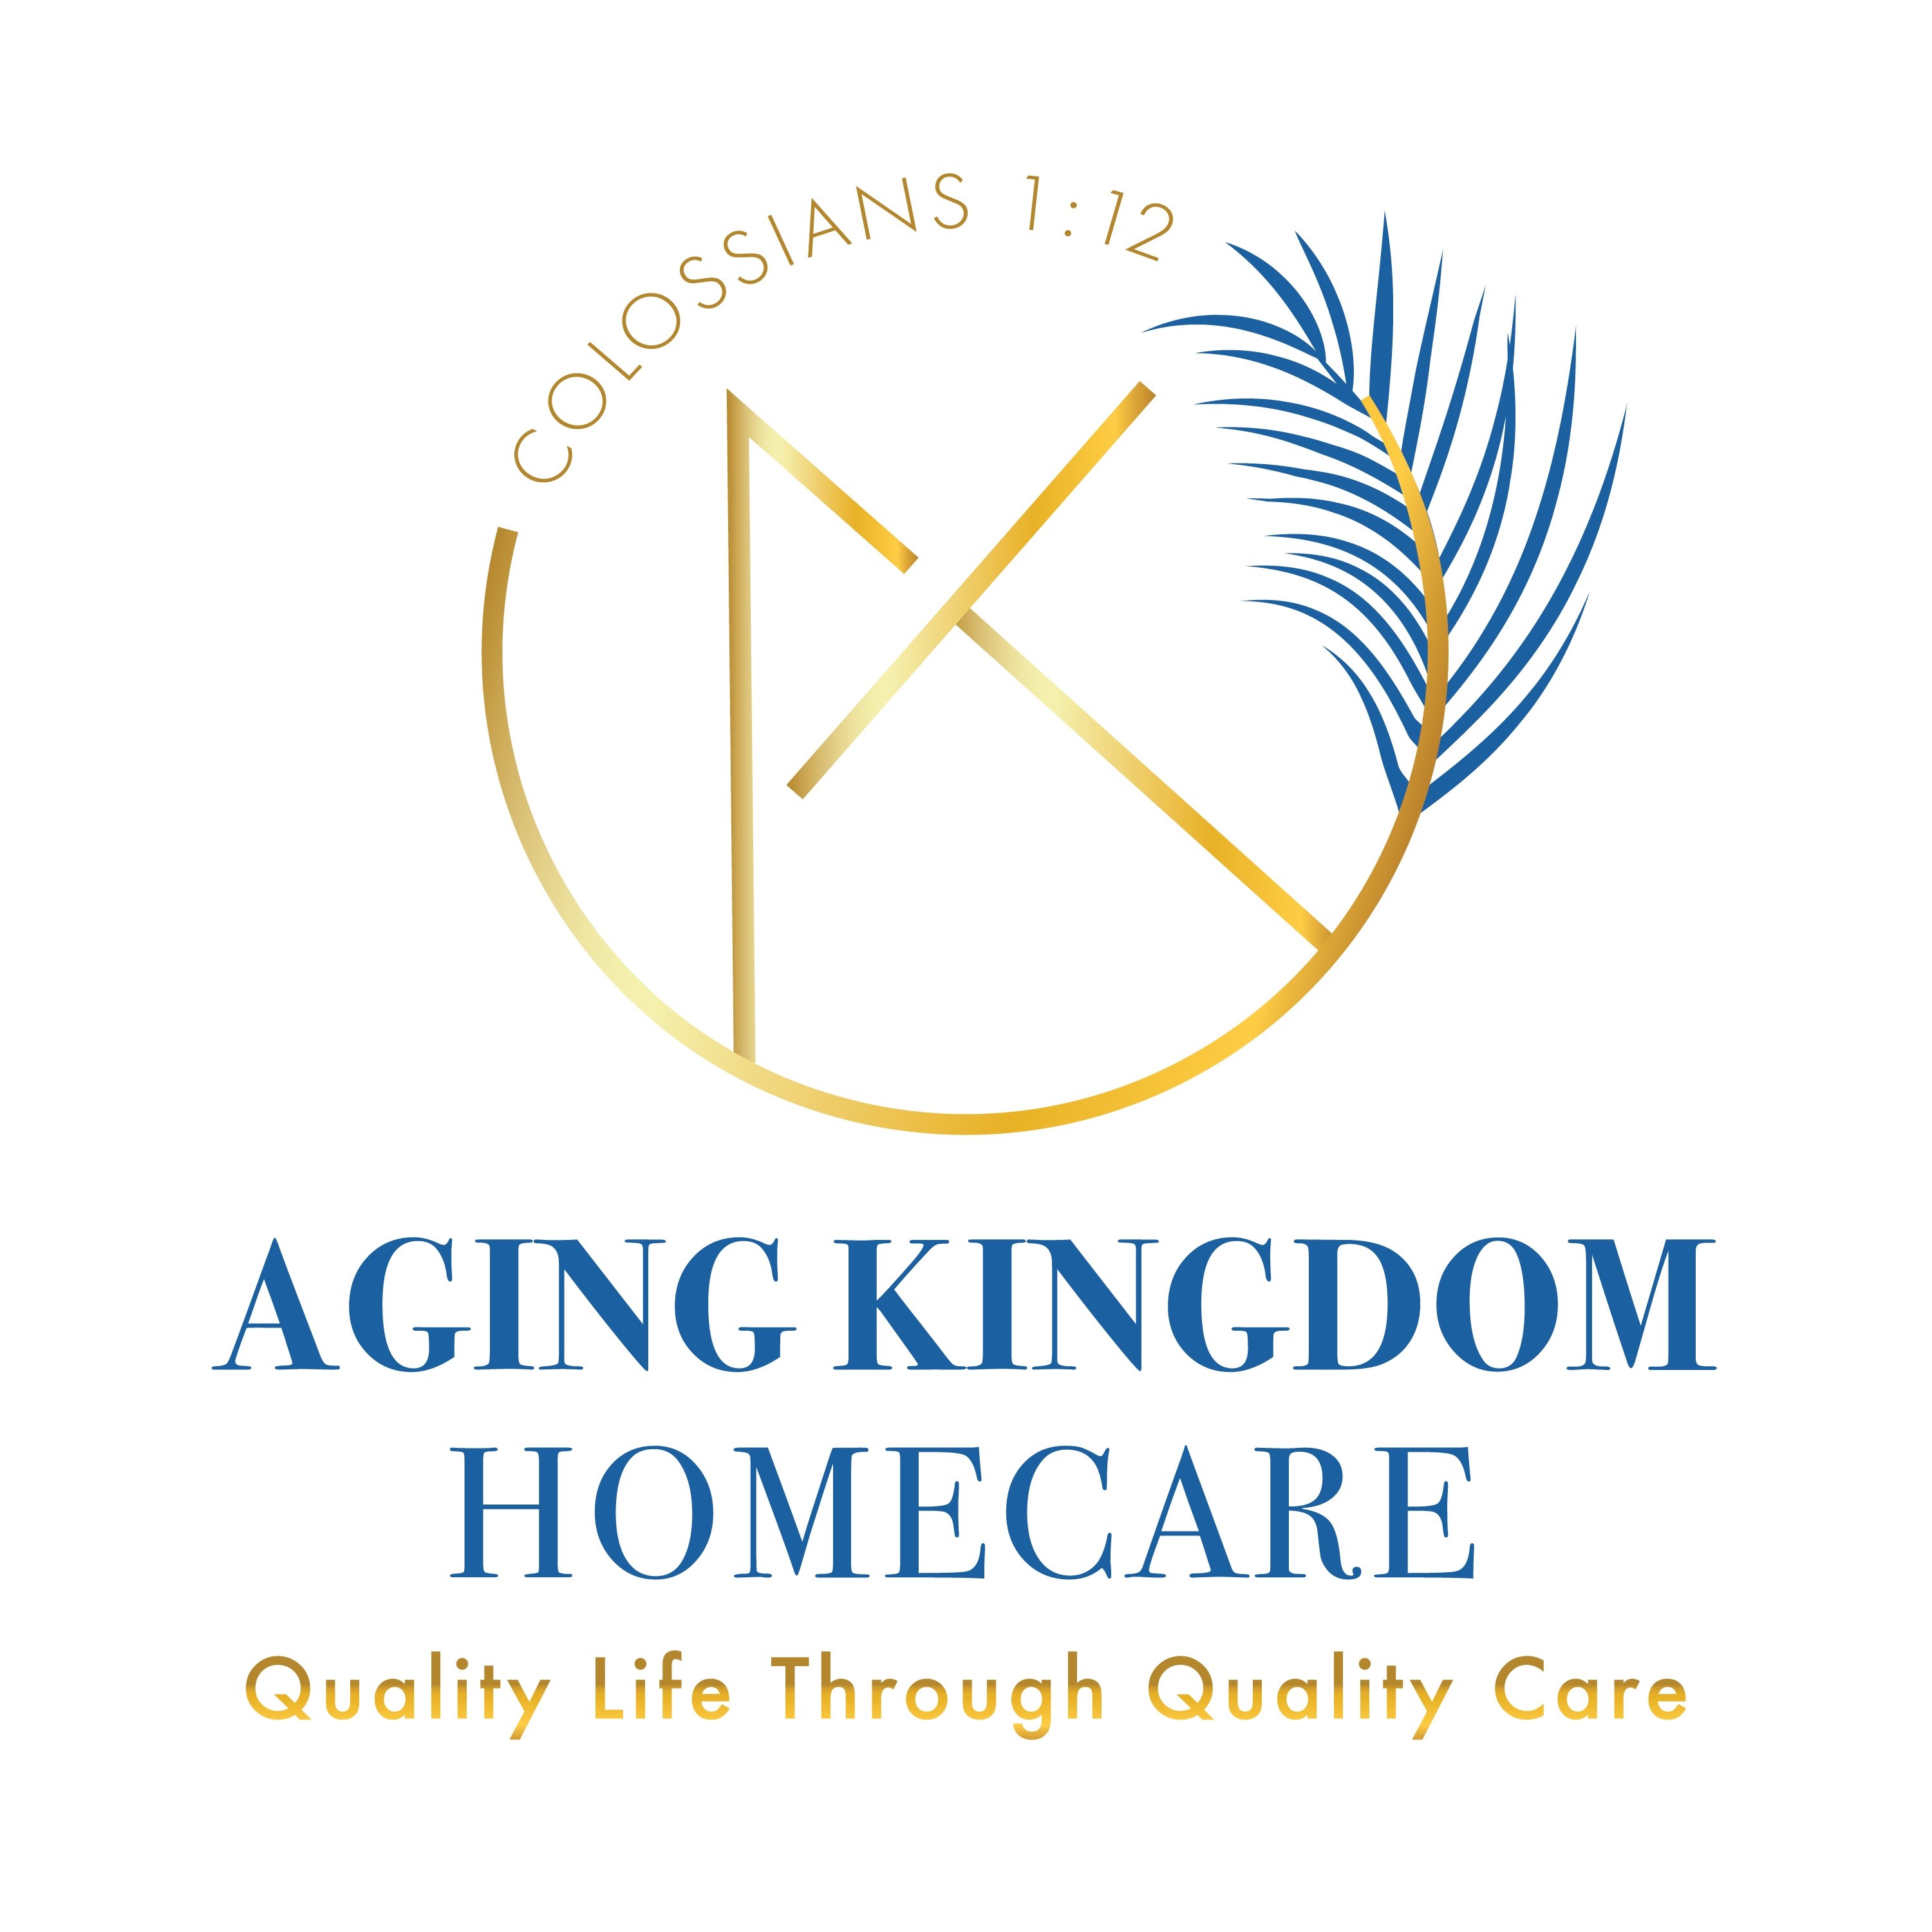 Aging Kingdom Homecare - Portland, ME